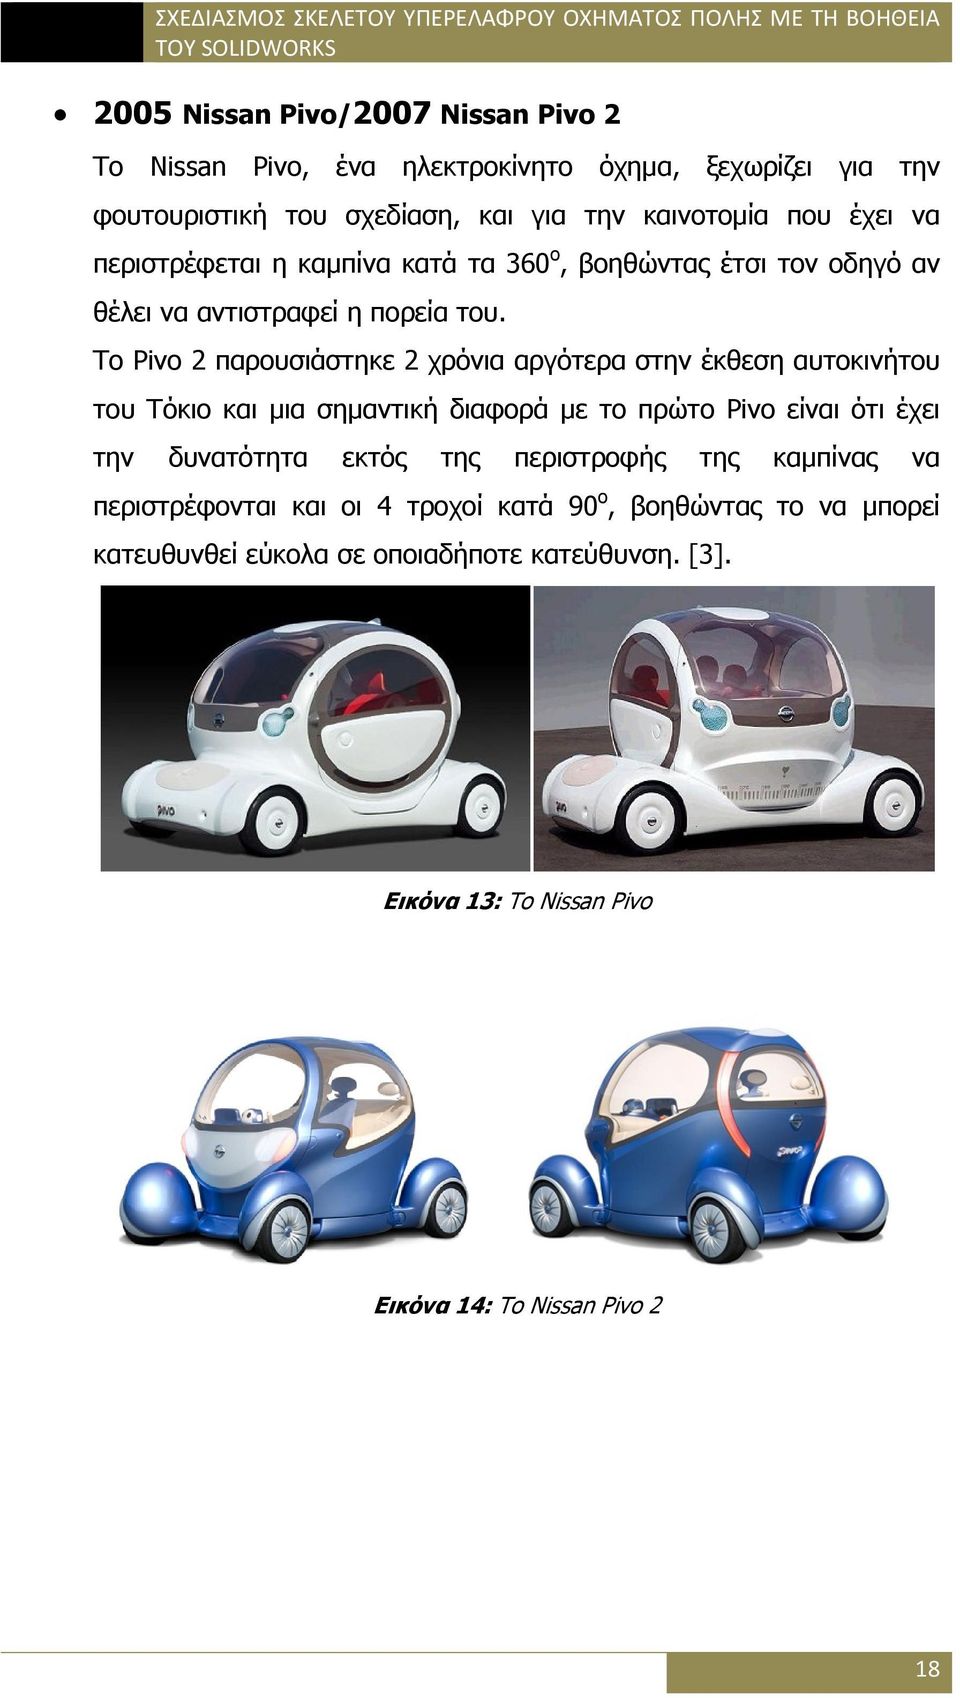 To Pivo 2 παρουσιάστηκε 2 χρόνια αργότερα στην έκθεση αυτοκινήτου του Τόκιο και μια σημαντική διαφορά με το πρώτο Pivo είναι ότι έχει την δυνατότητα εκτός